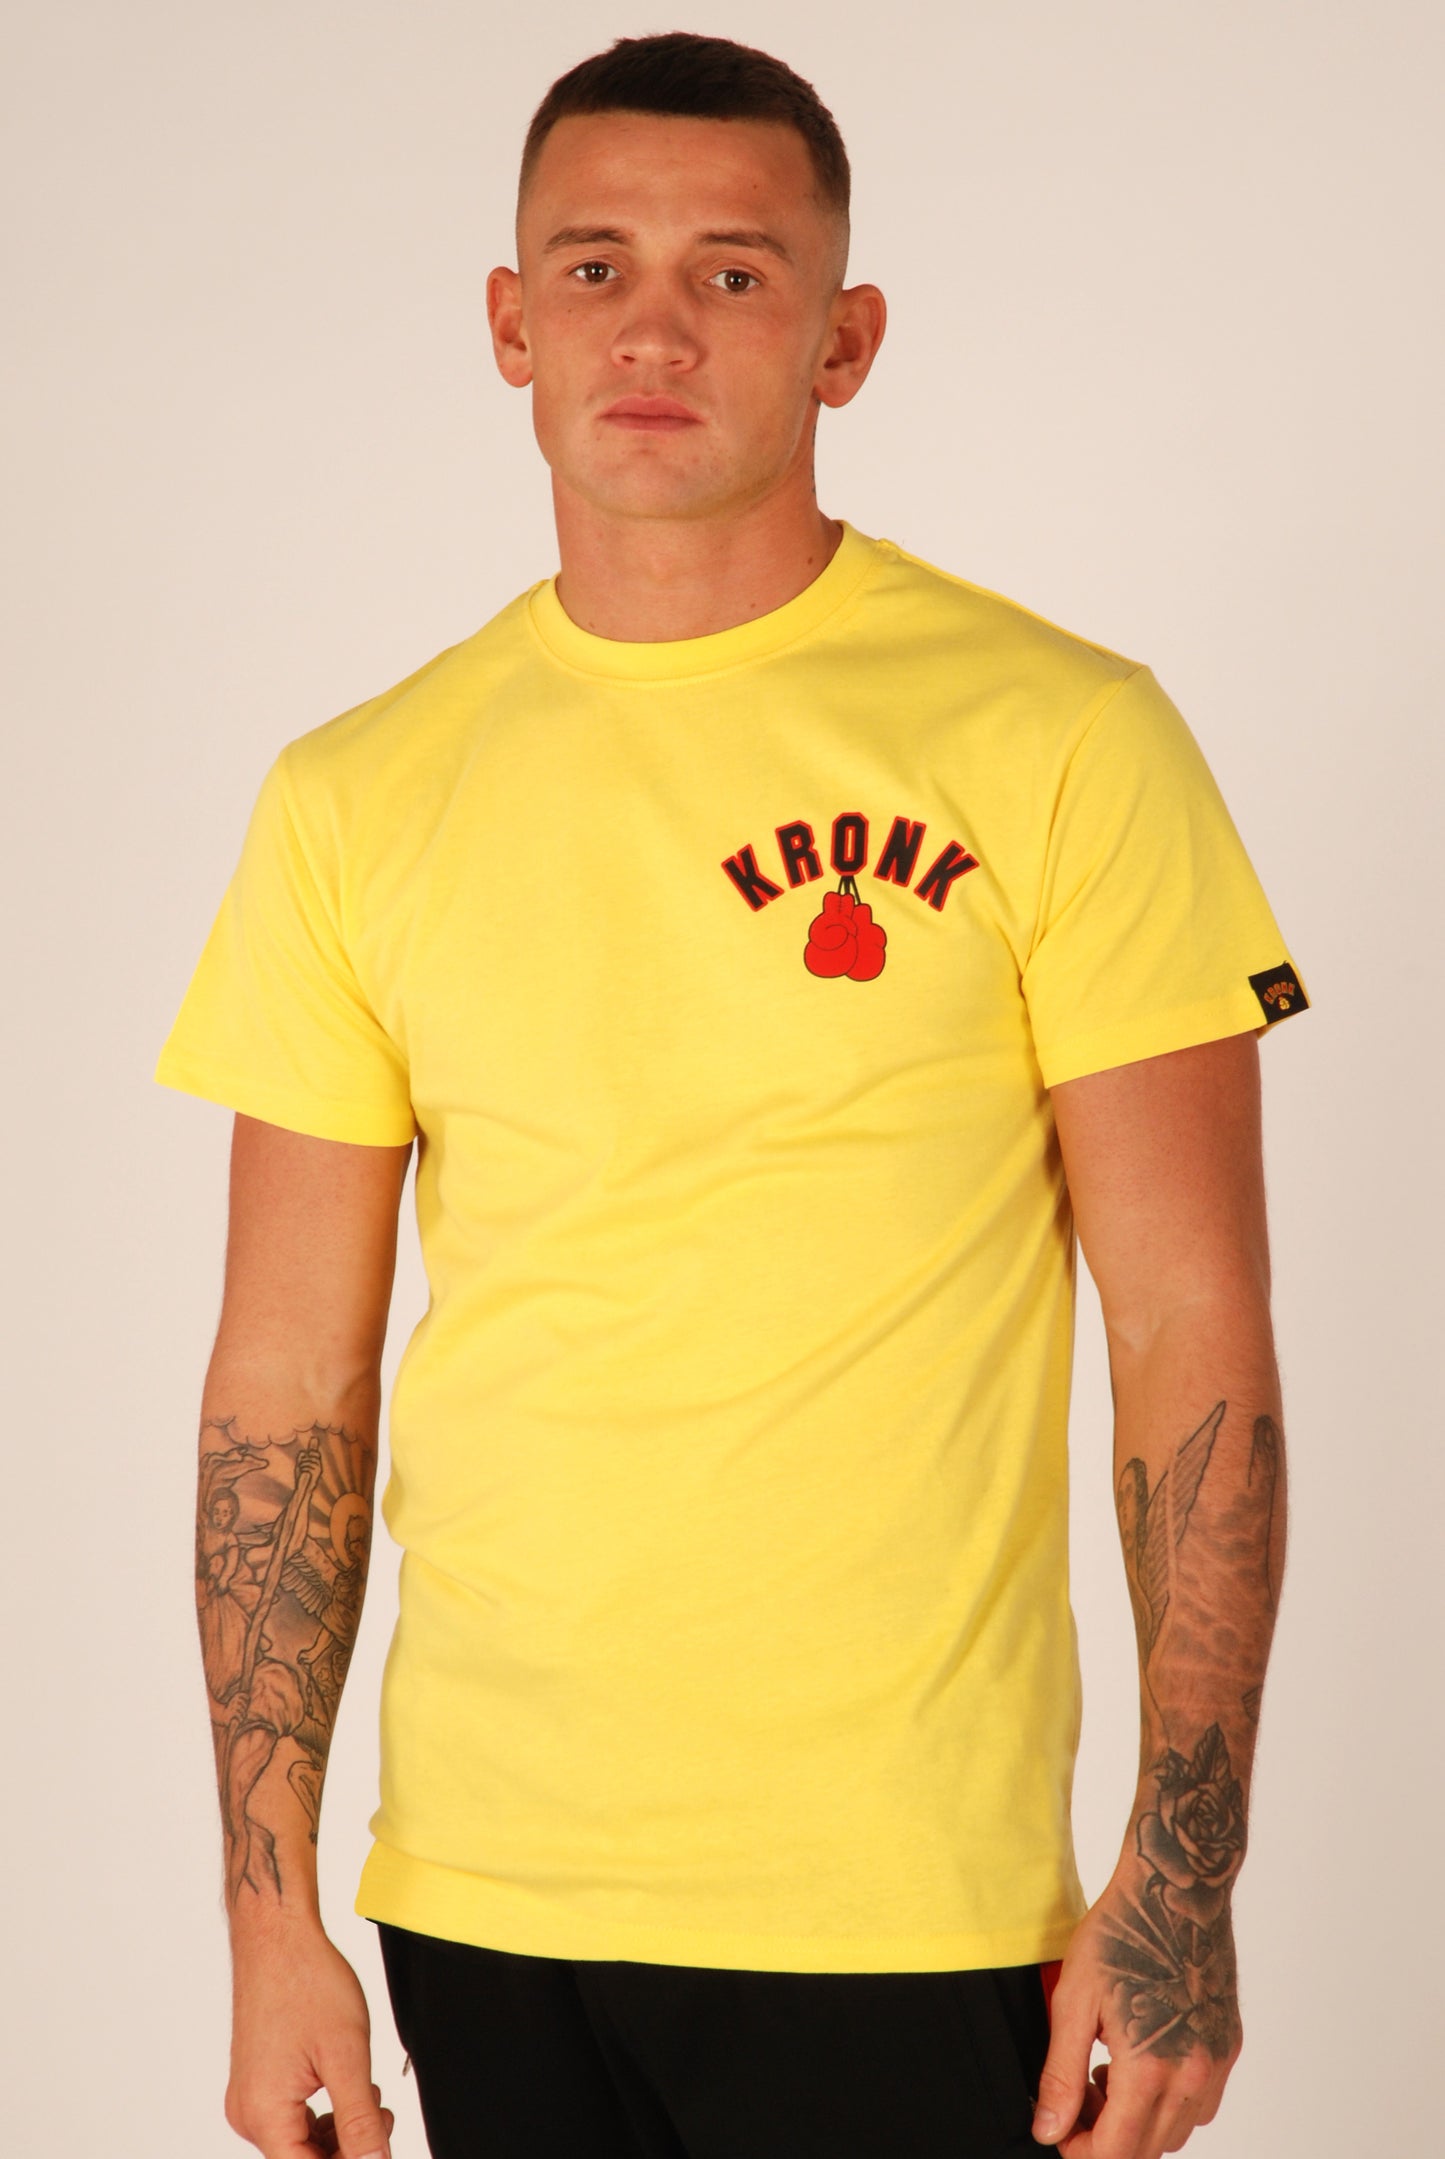 KRONK Julio Cesar Chavez Training Camp Regular Fit T Shirt Yellow